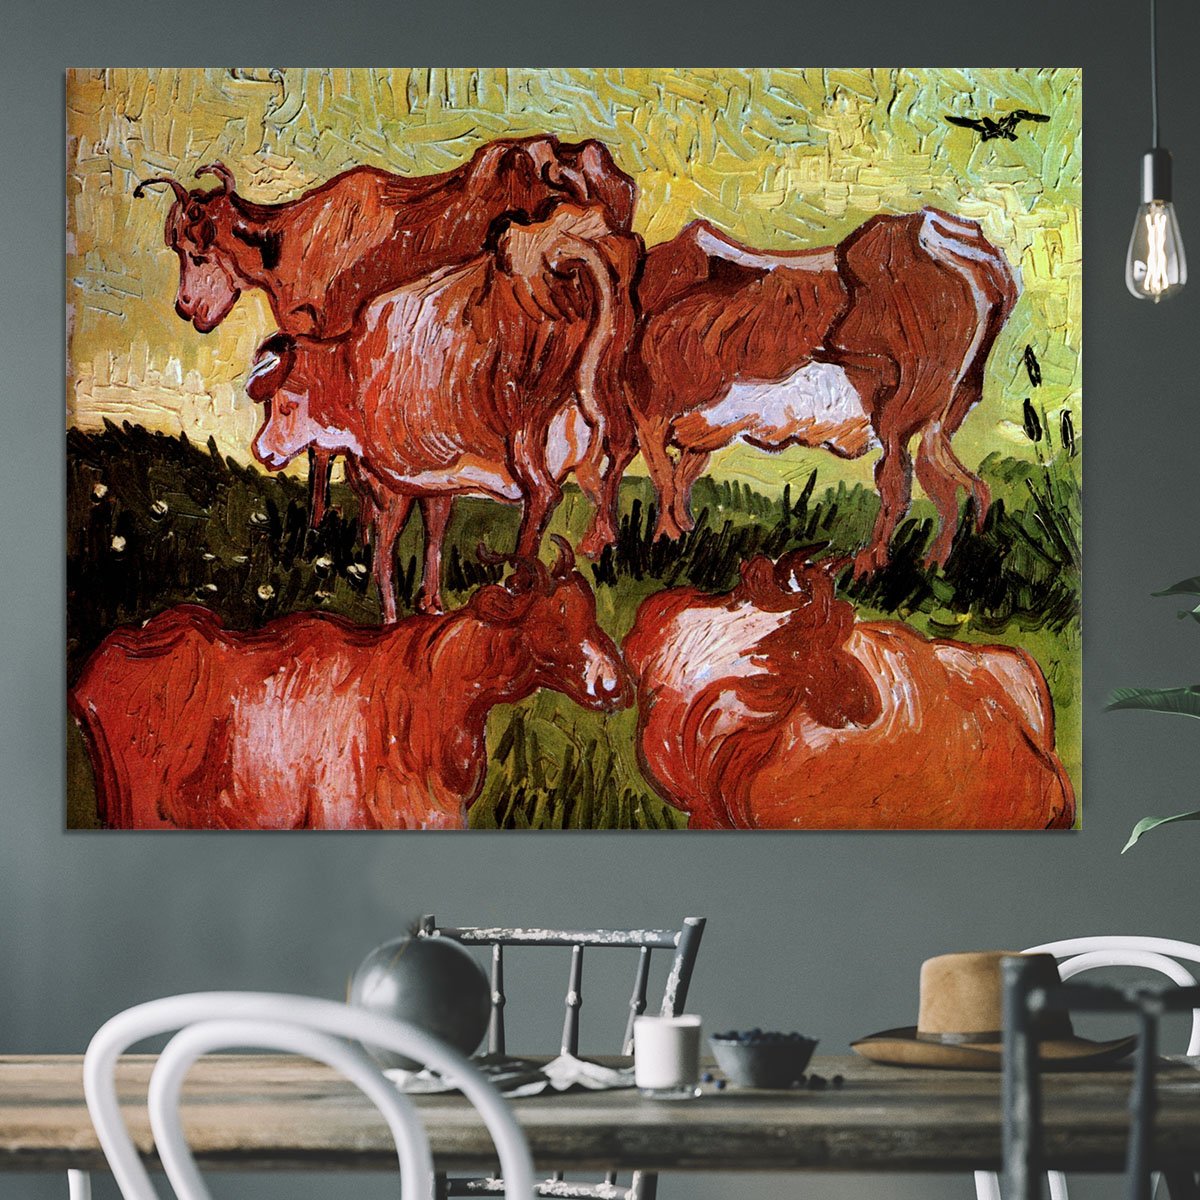 Cows after Jordaens by Van Gogh Canvas Print or Poster